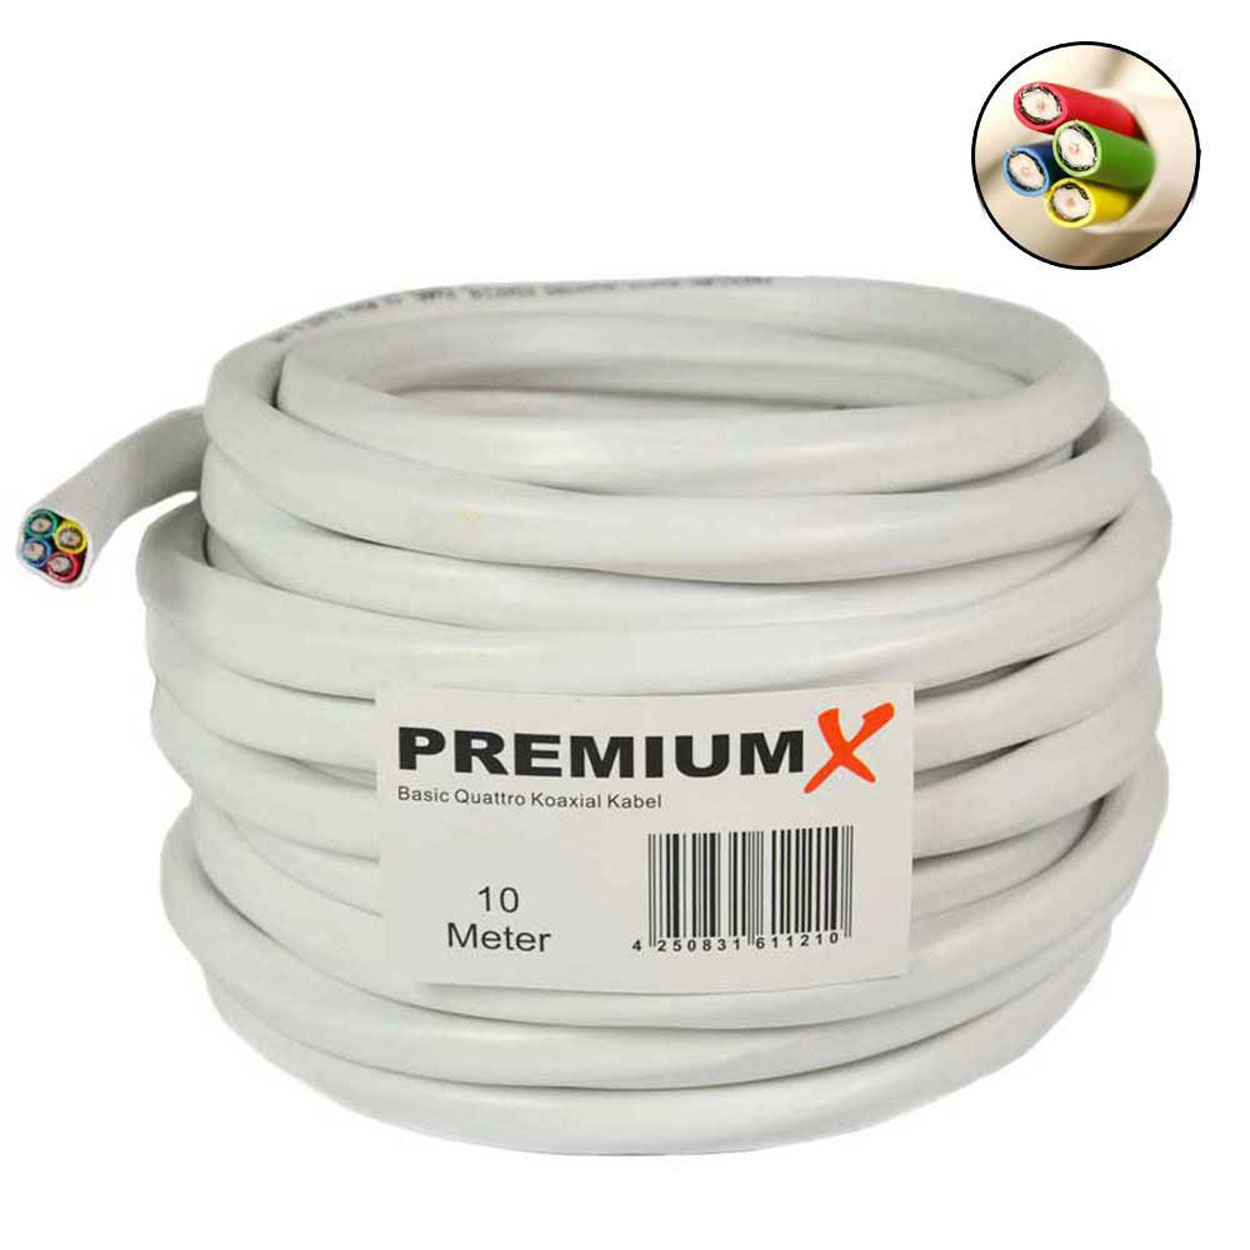 PREMIUMX 10m Basic Kabel Antennenkabel 90dB Quad Koaxial Weiß SAT Quattro F-Stecker 8x